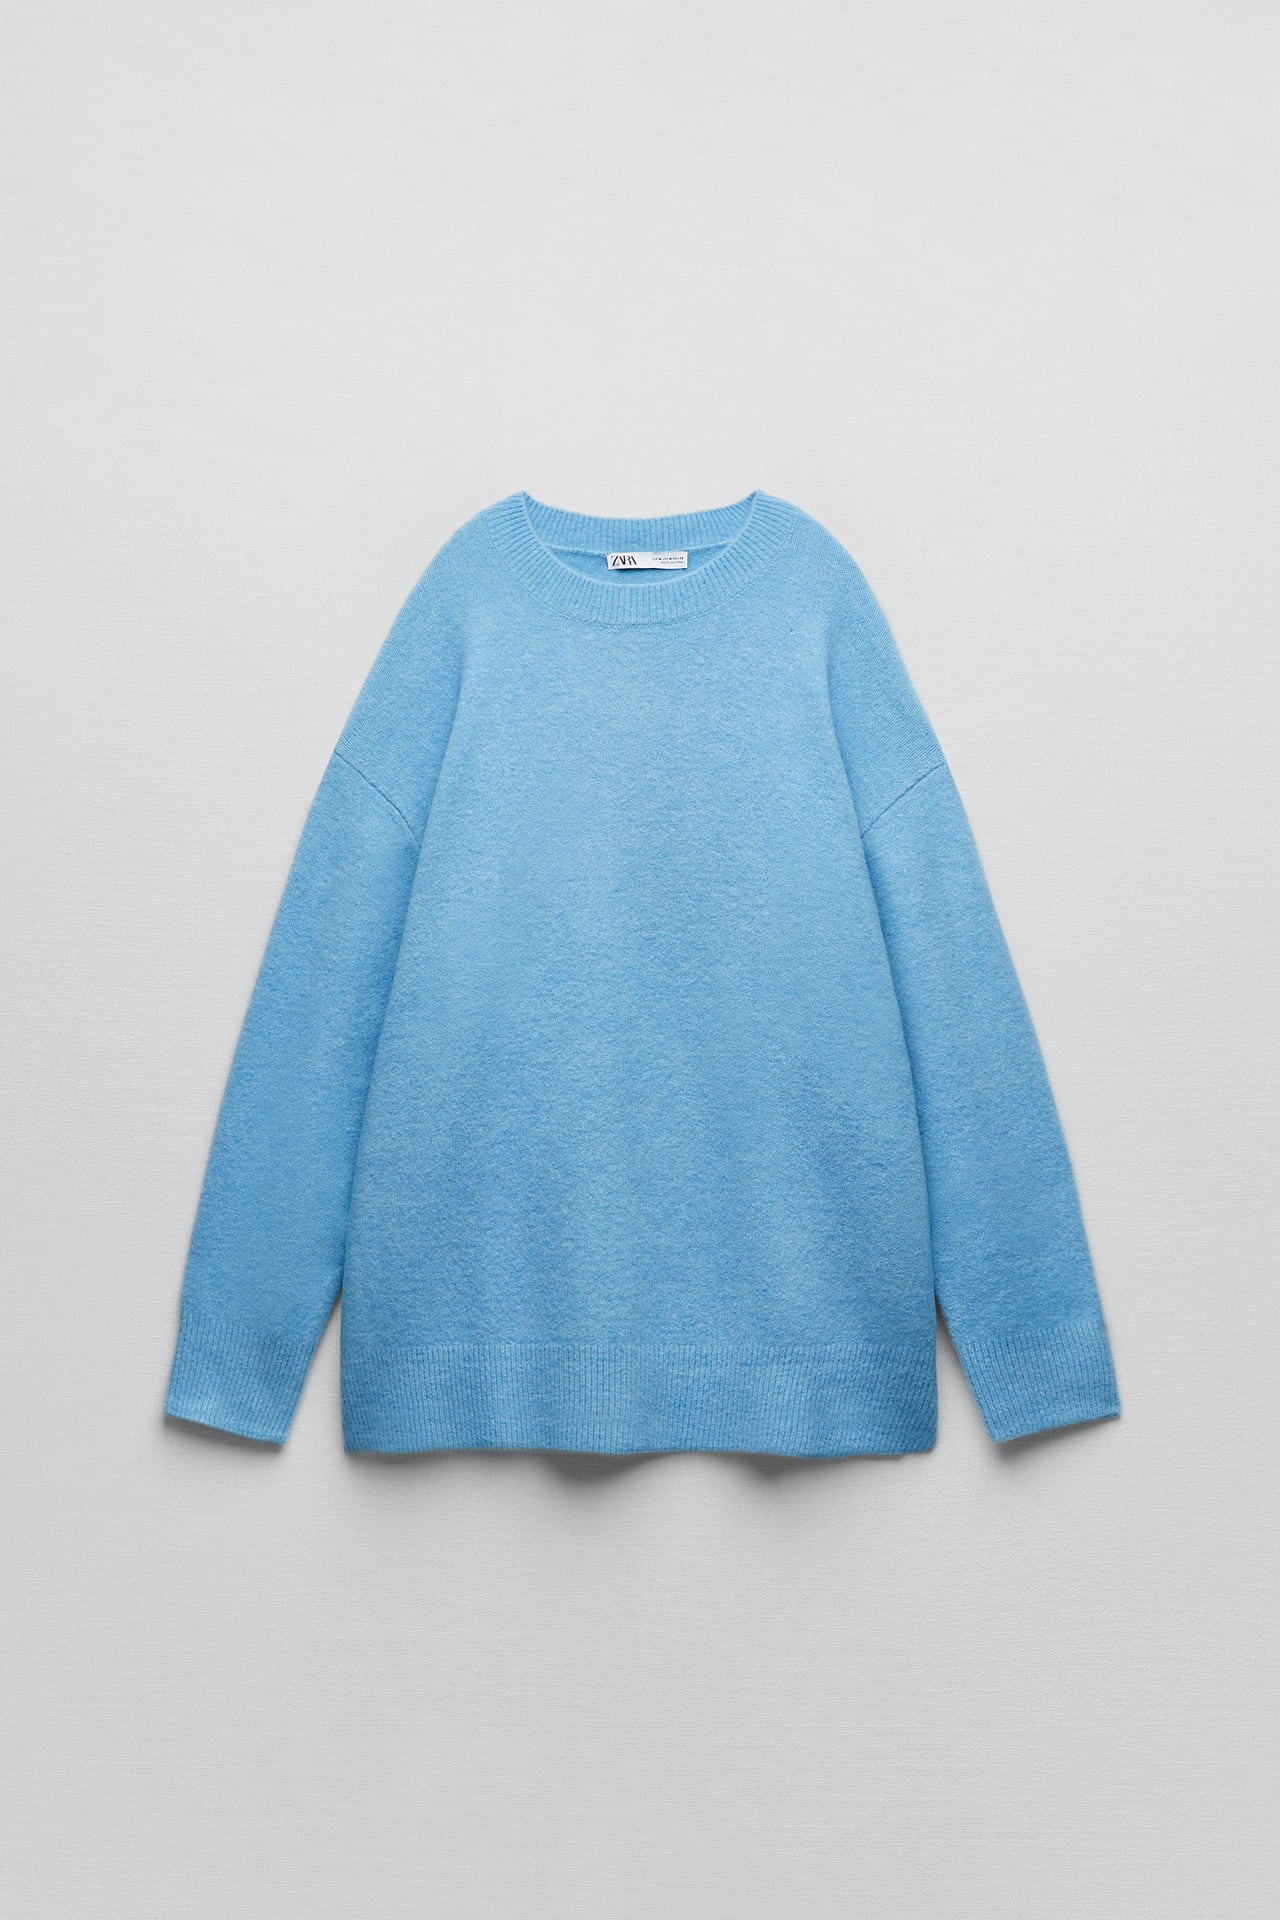 Zara + Oversize Soft Knit Sweater